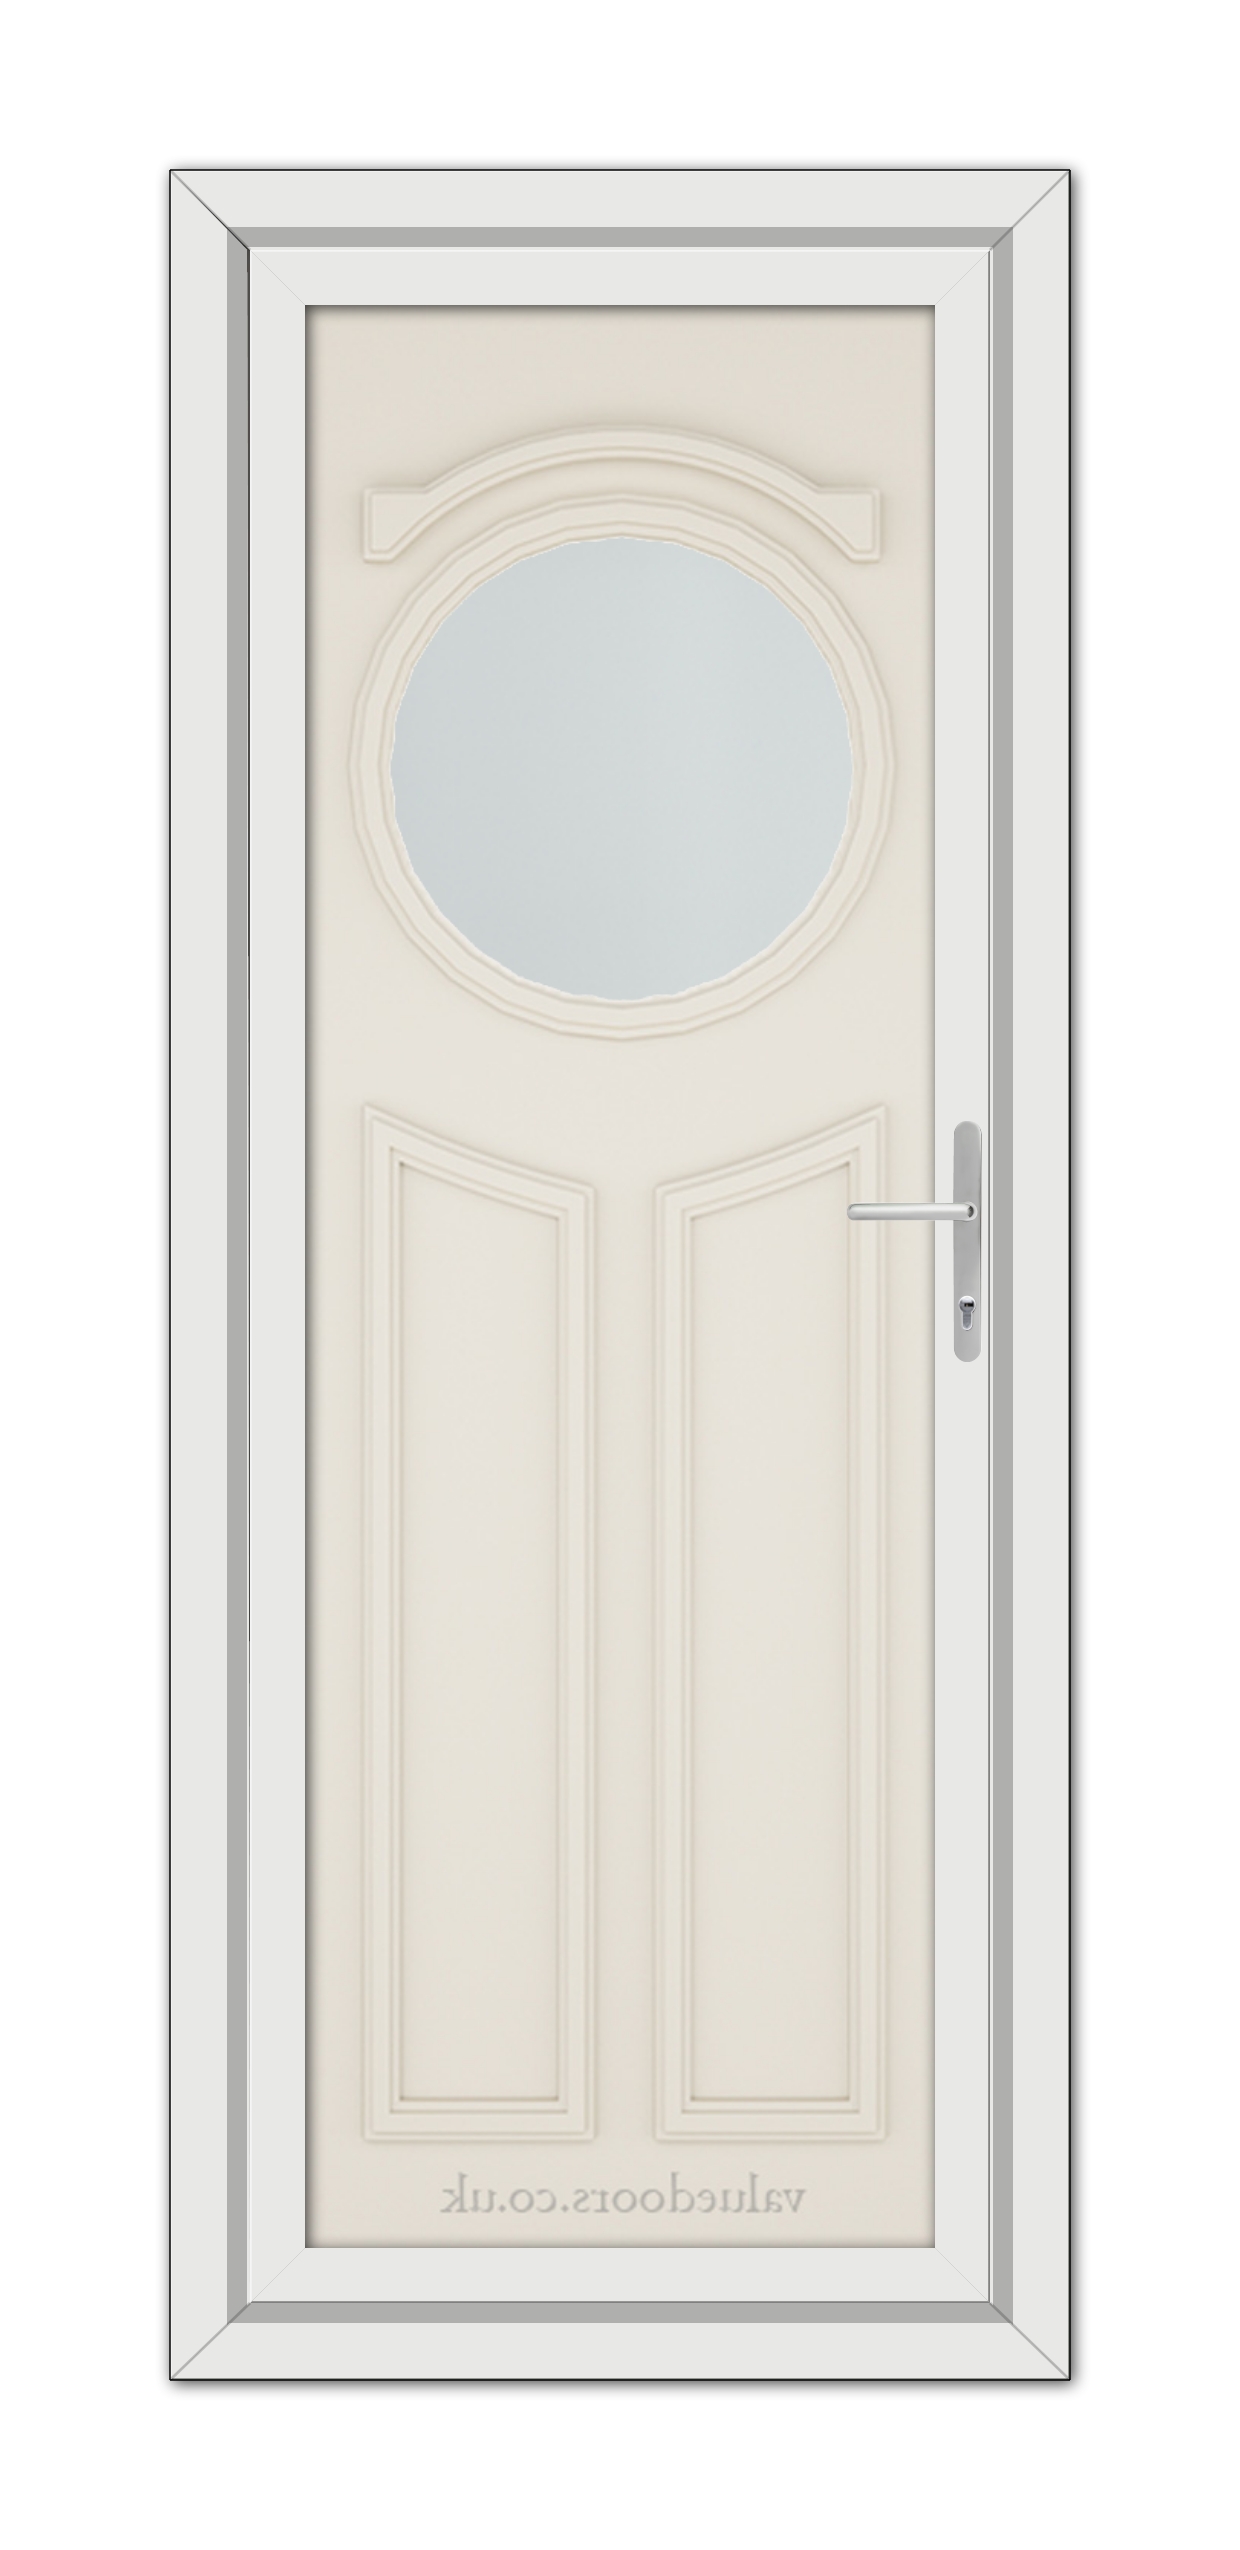 A vertical image of a Cream Blenheim uPVC Door featuring an oval window and a modern handle, set within a light gray frame.